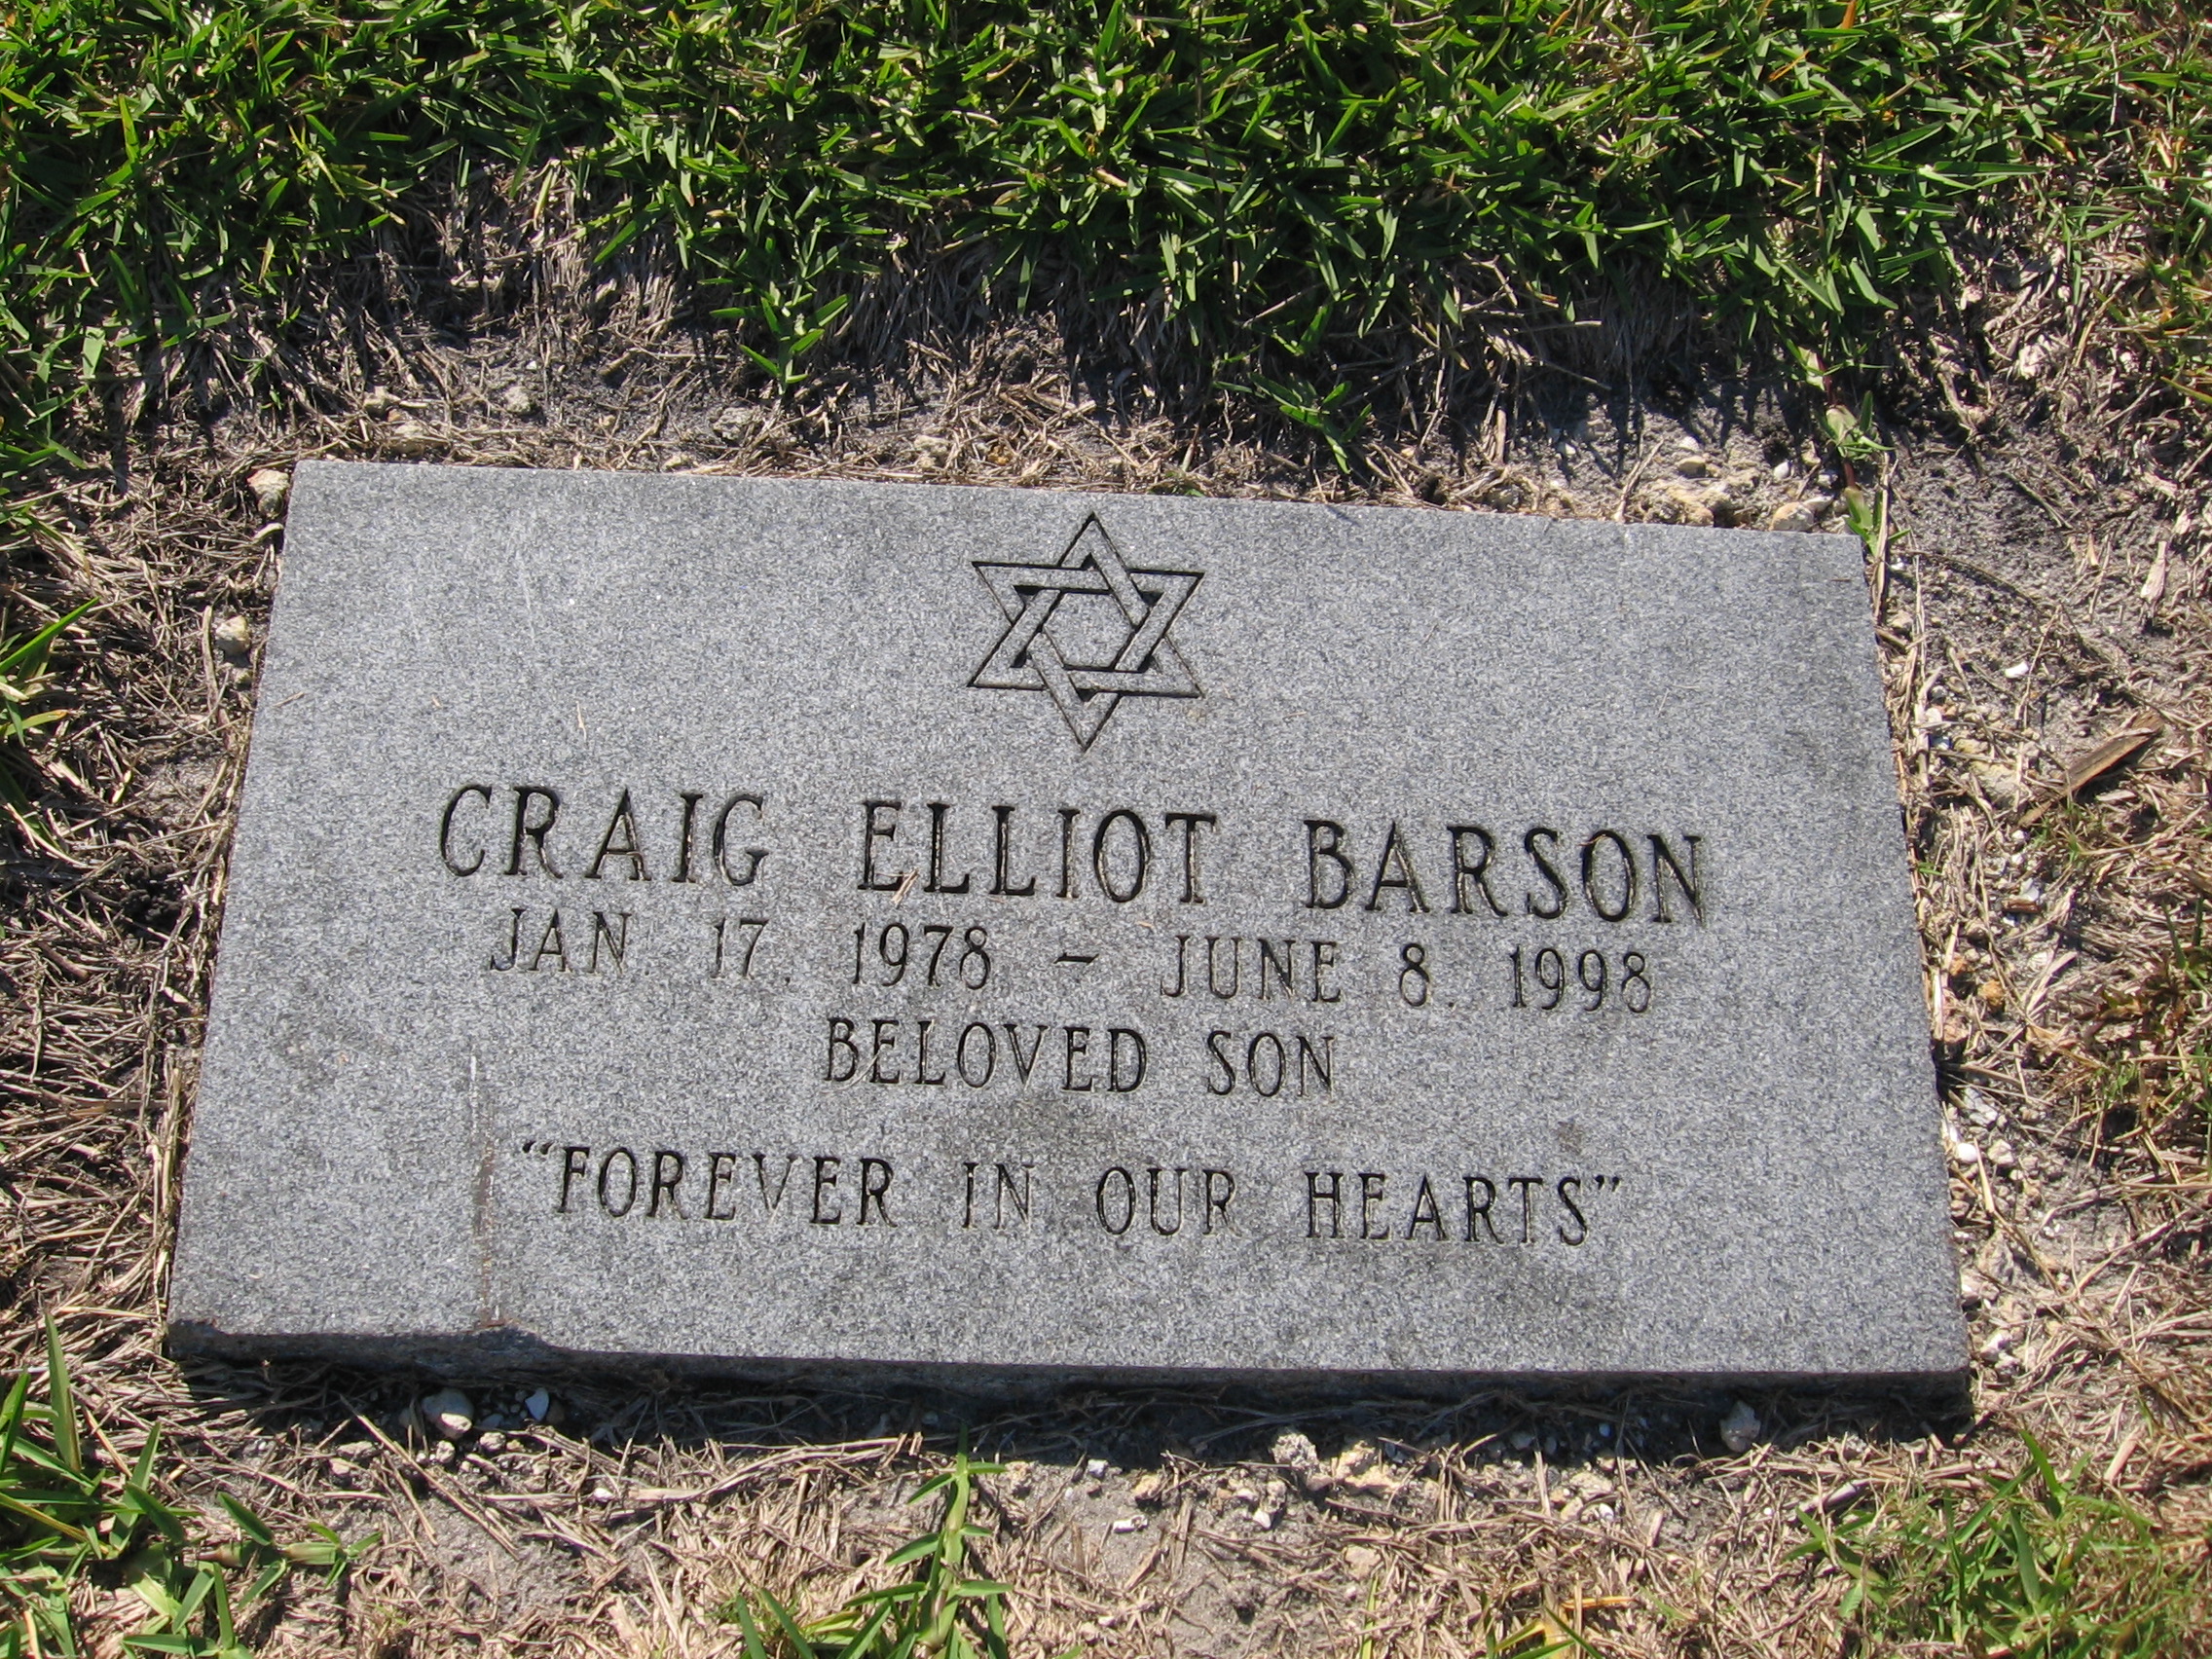 Craig Elliot Barson